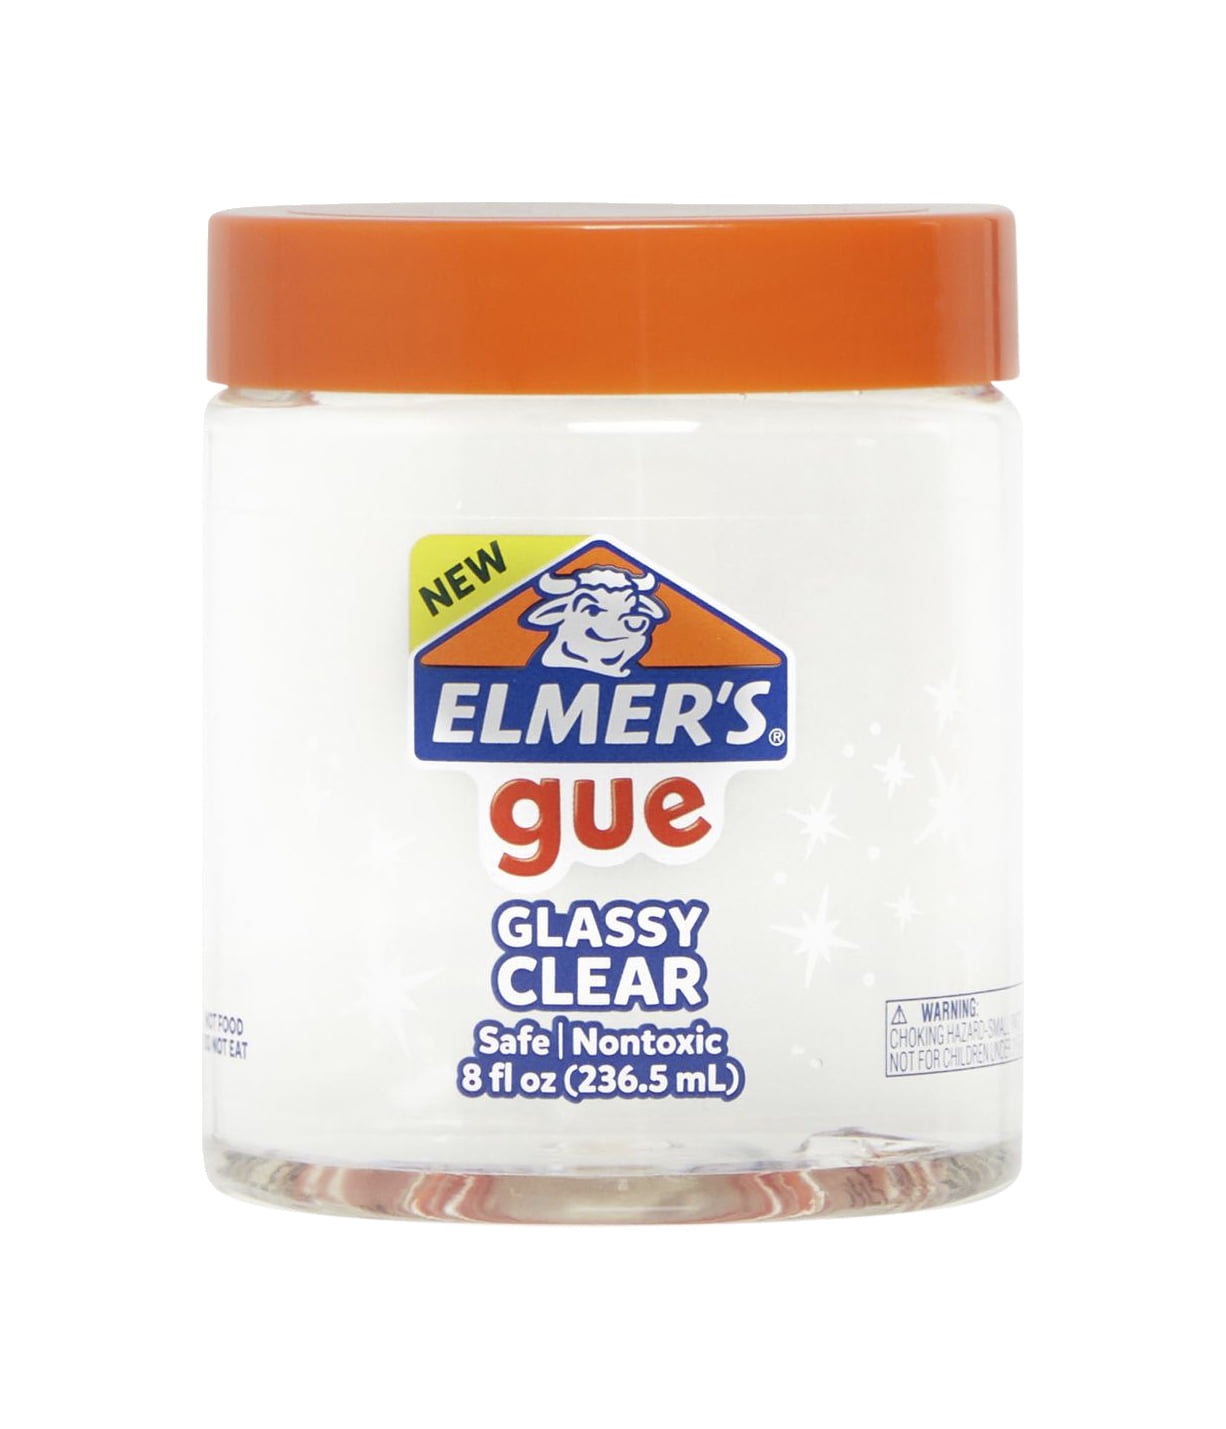 Elmer's Gue Slime Kit 48oz Just $15.97 Shipped on  (Reg. $35